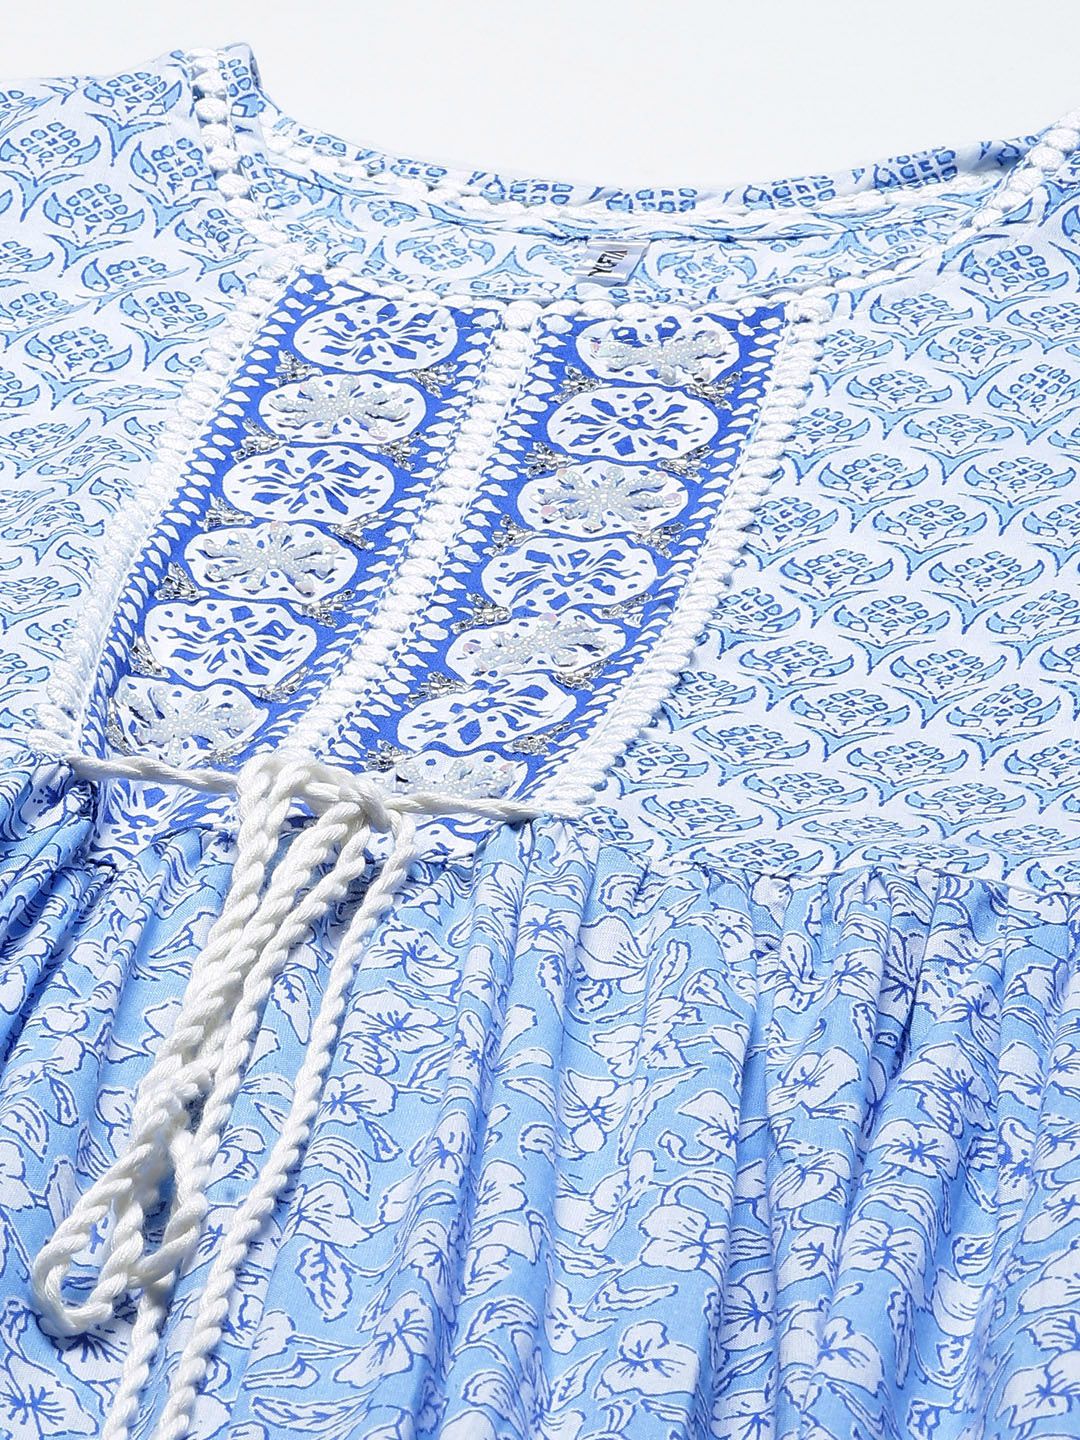 White & Blue Ethnic Dress-Yufta Store-3107DRSBLS